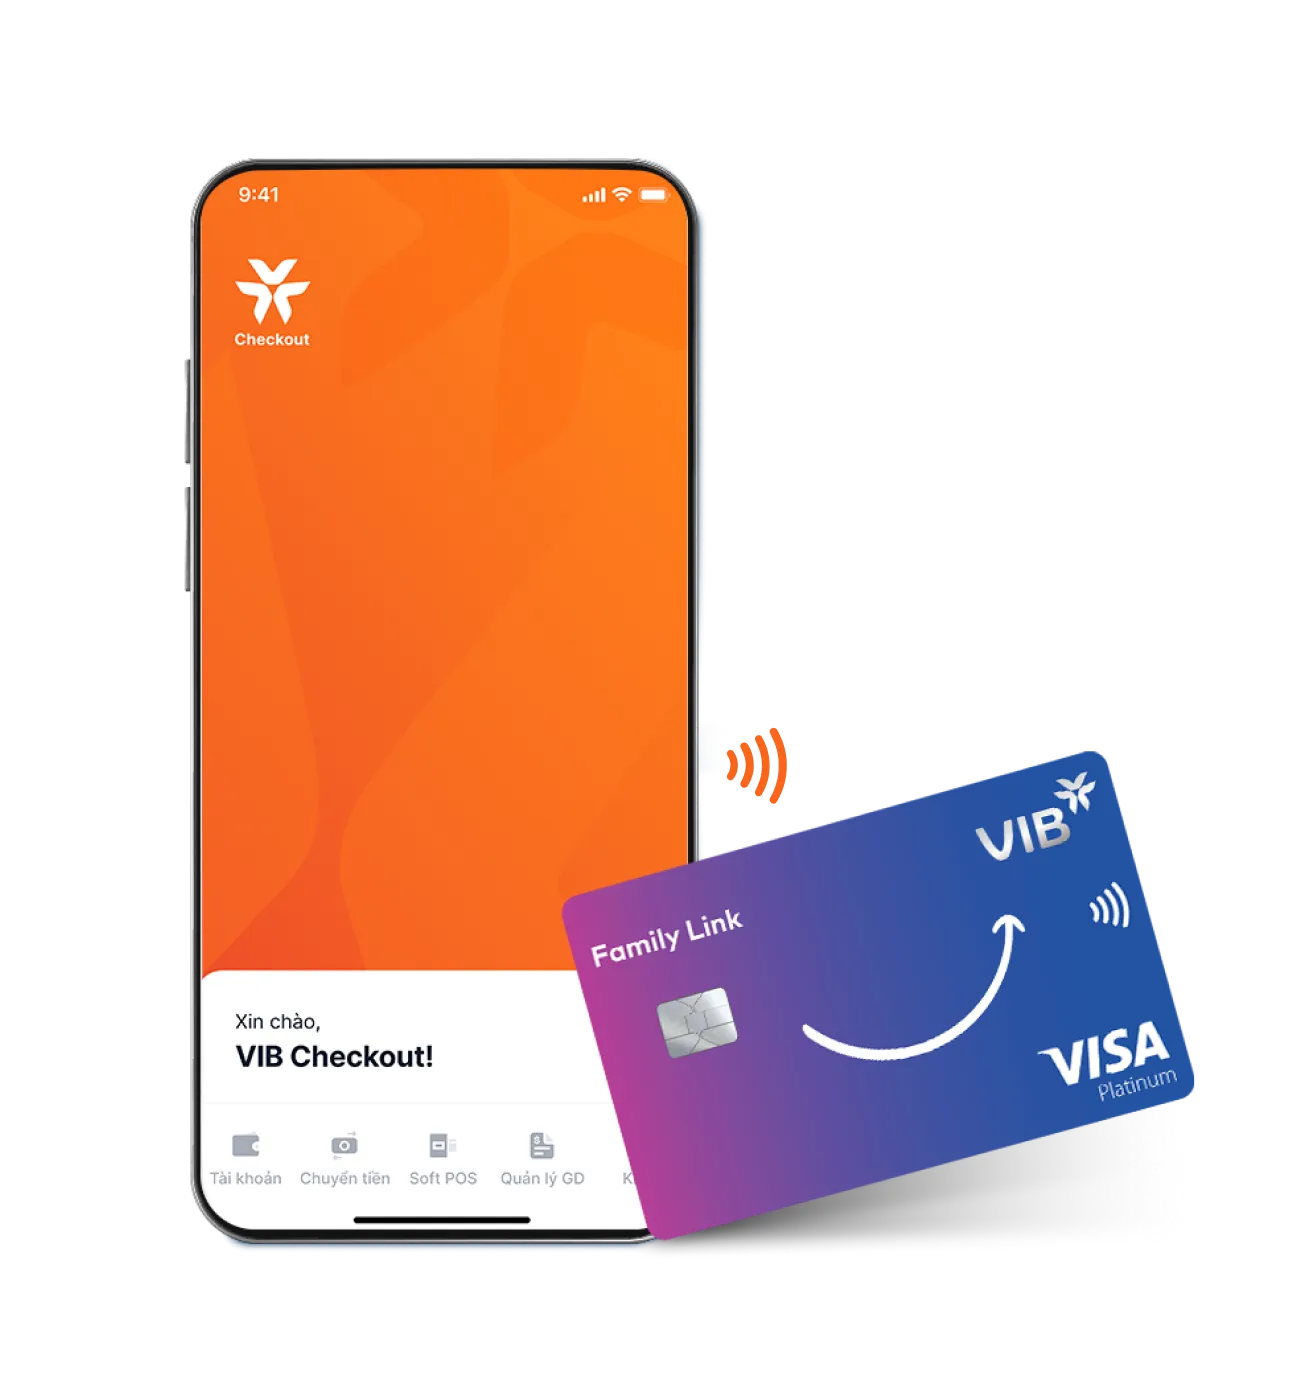 Mobile banking MyVIB 2.0